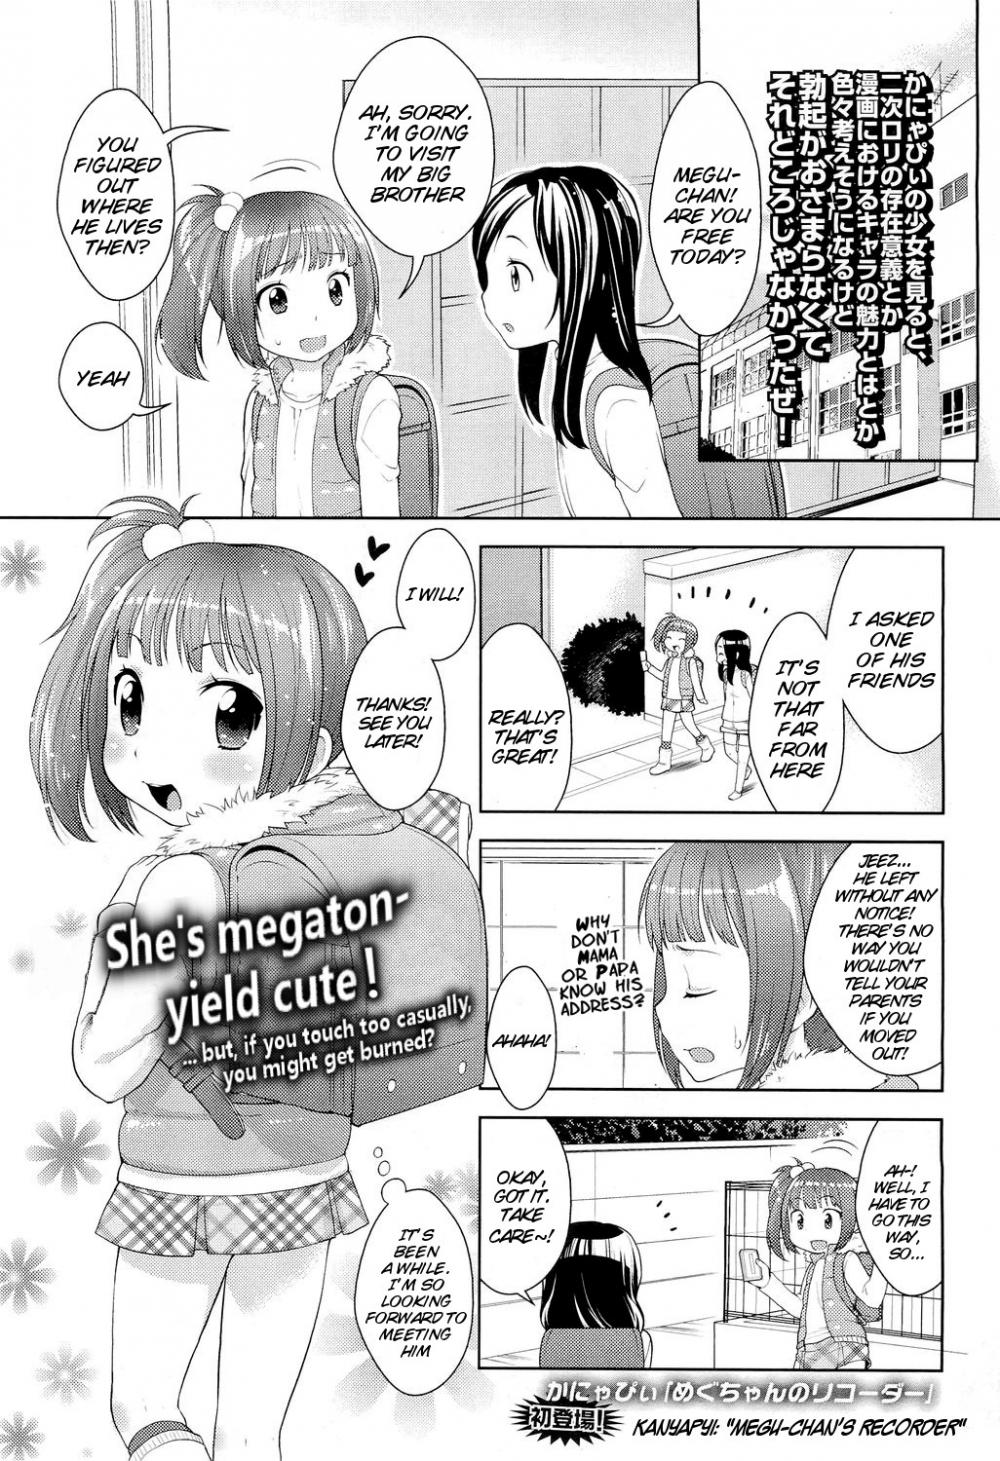 Hentai Manga Comic-Megu-chan's Recorder-Read-1